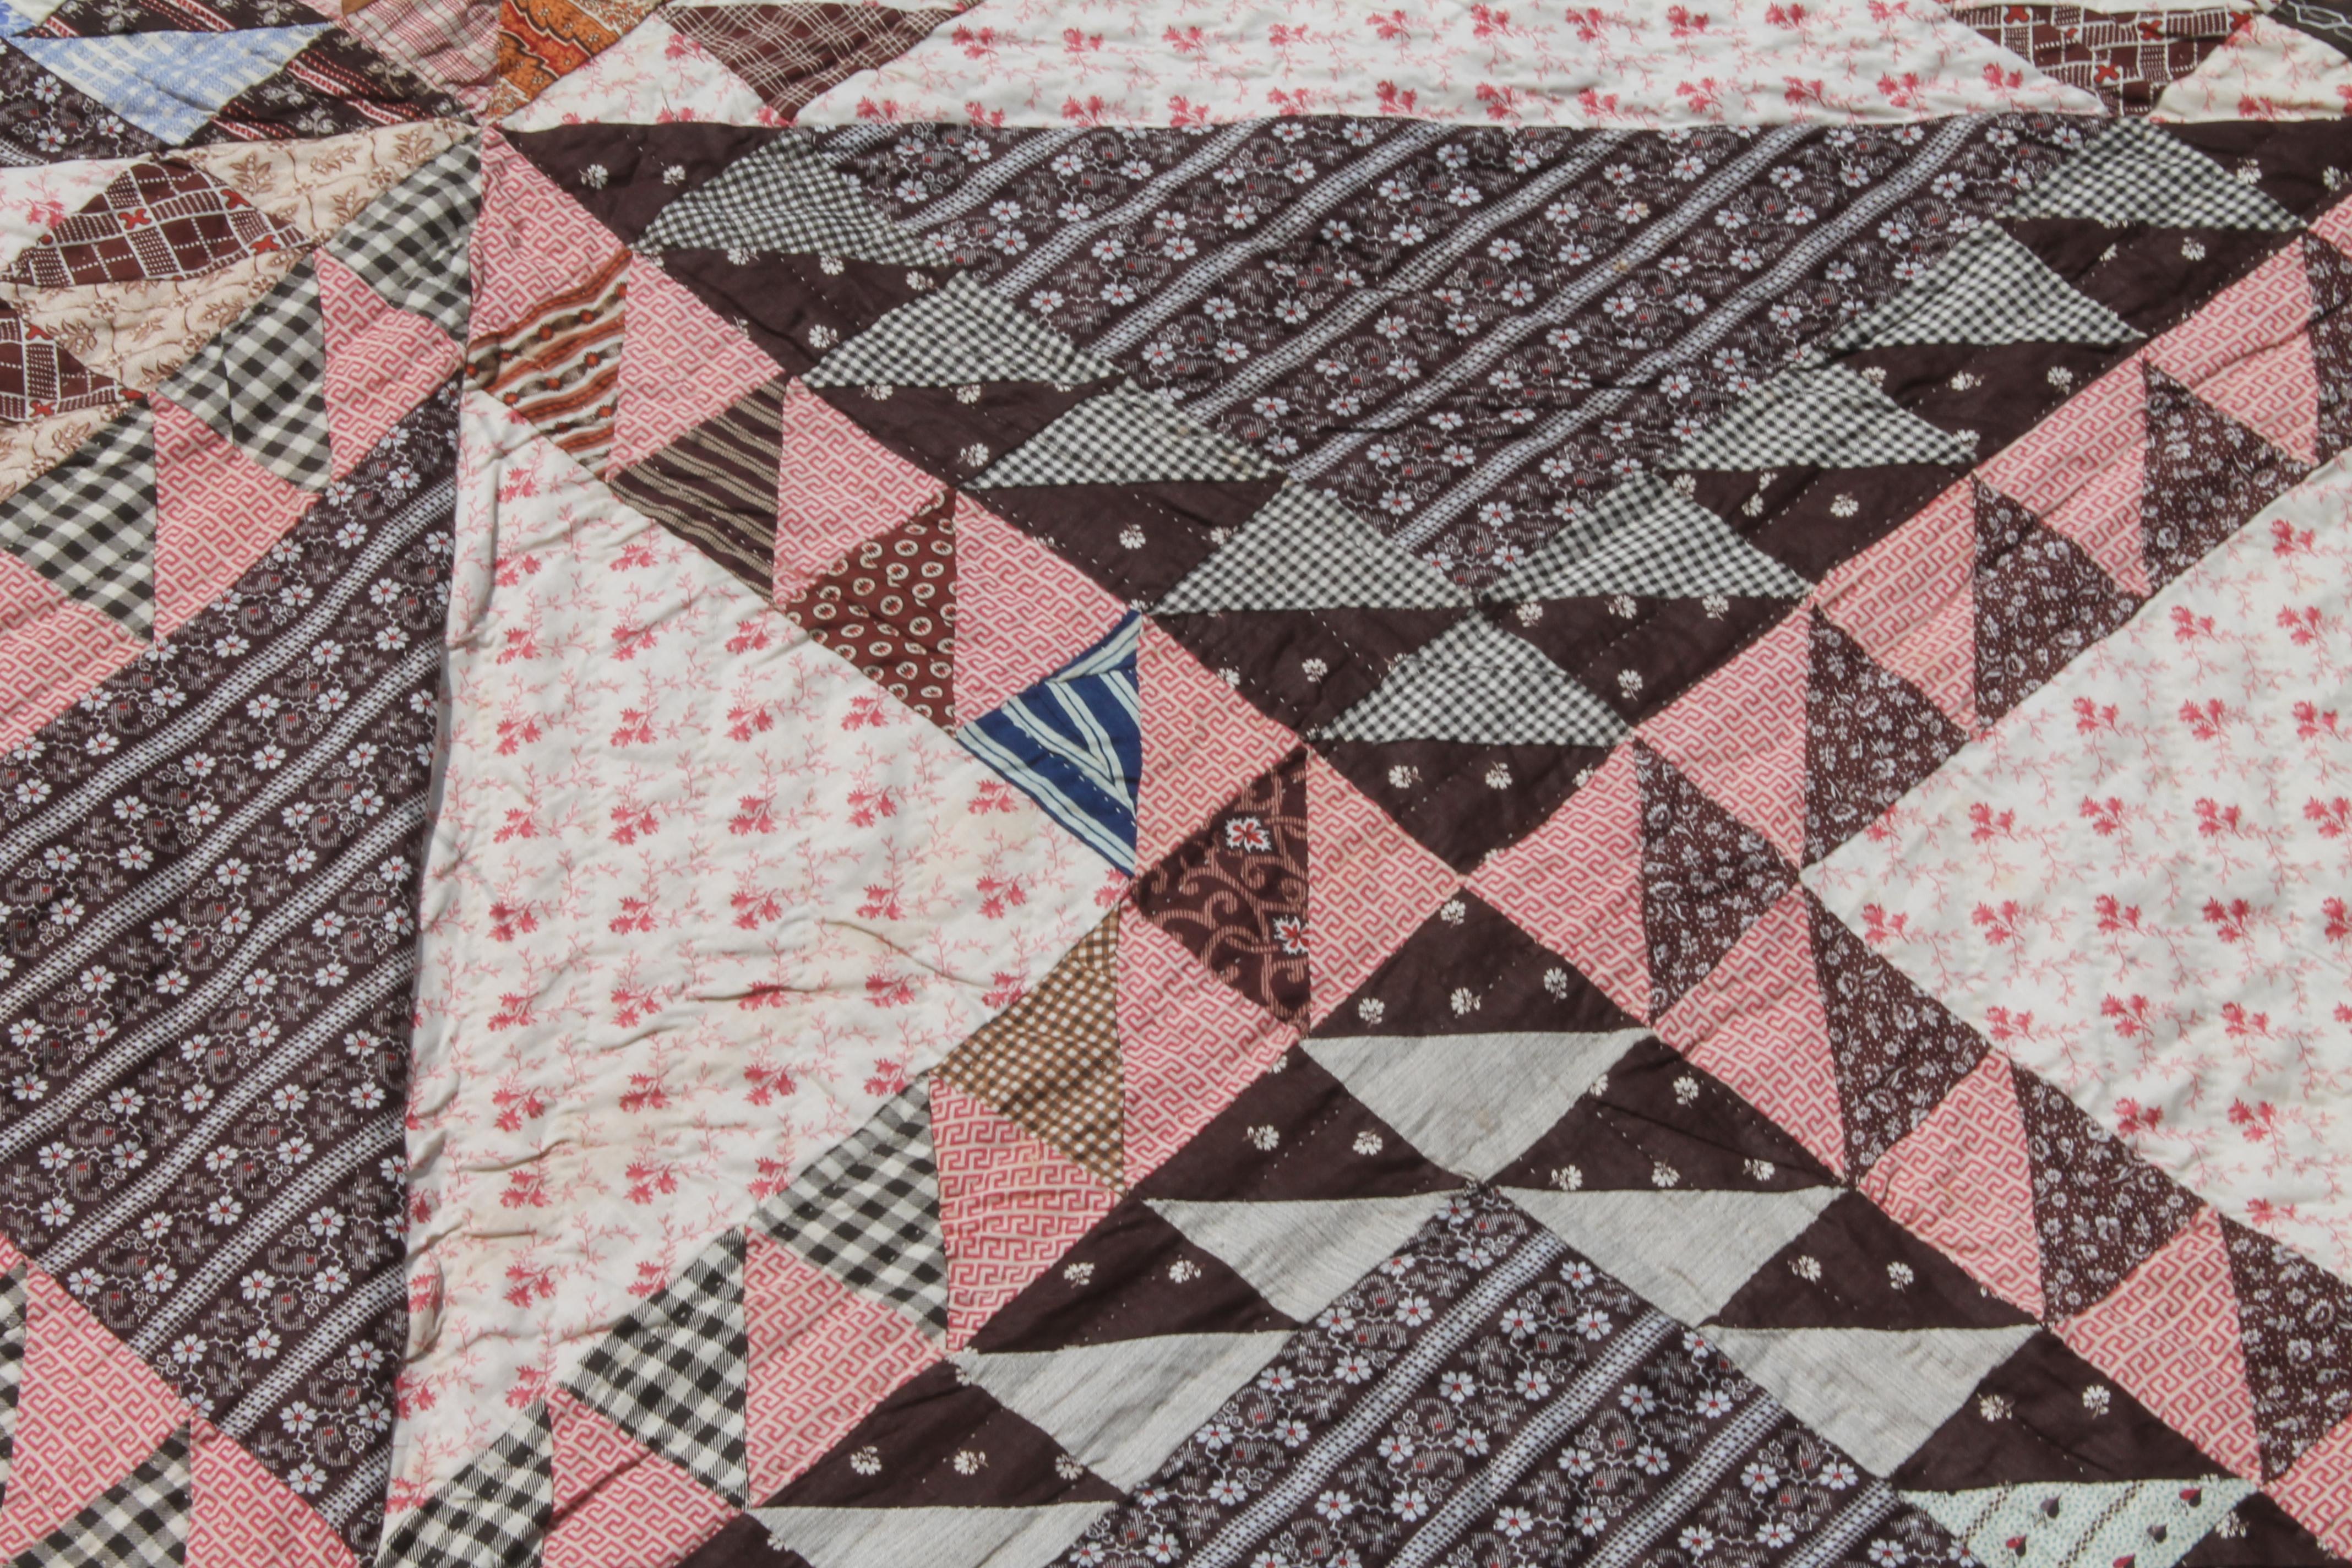 anita's arrowhead quilt pattern